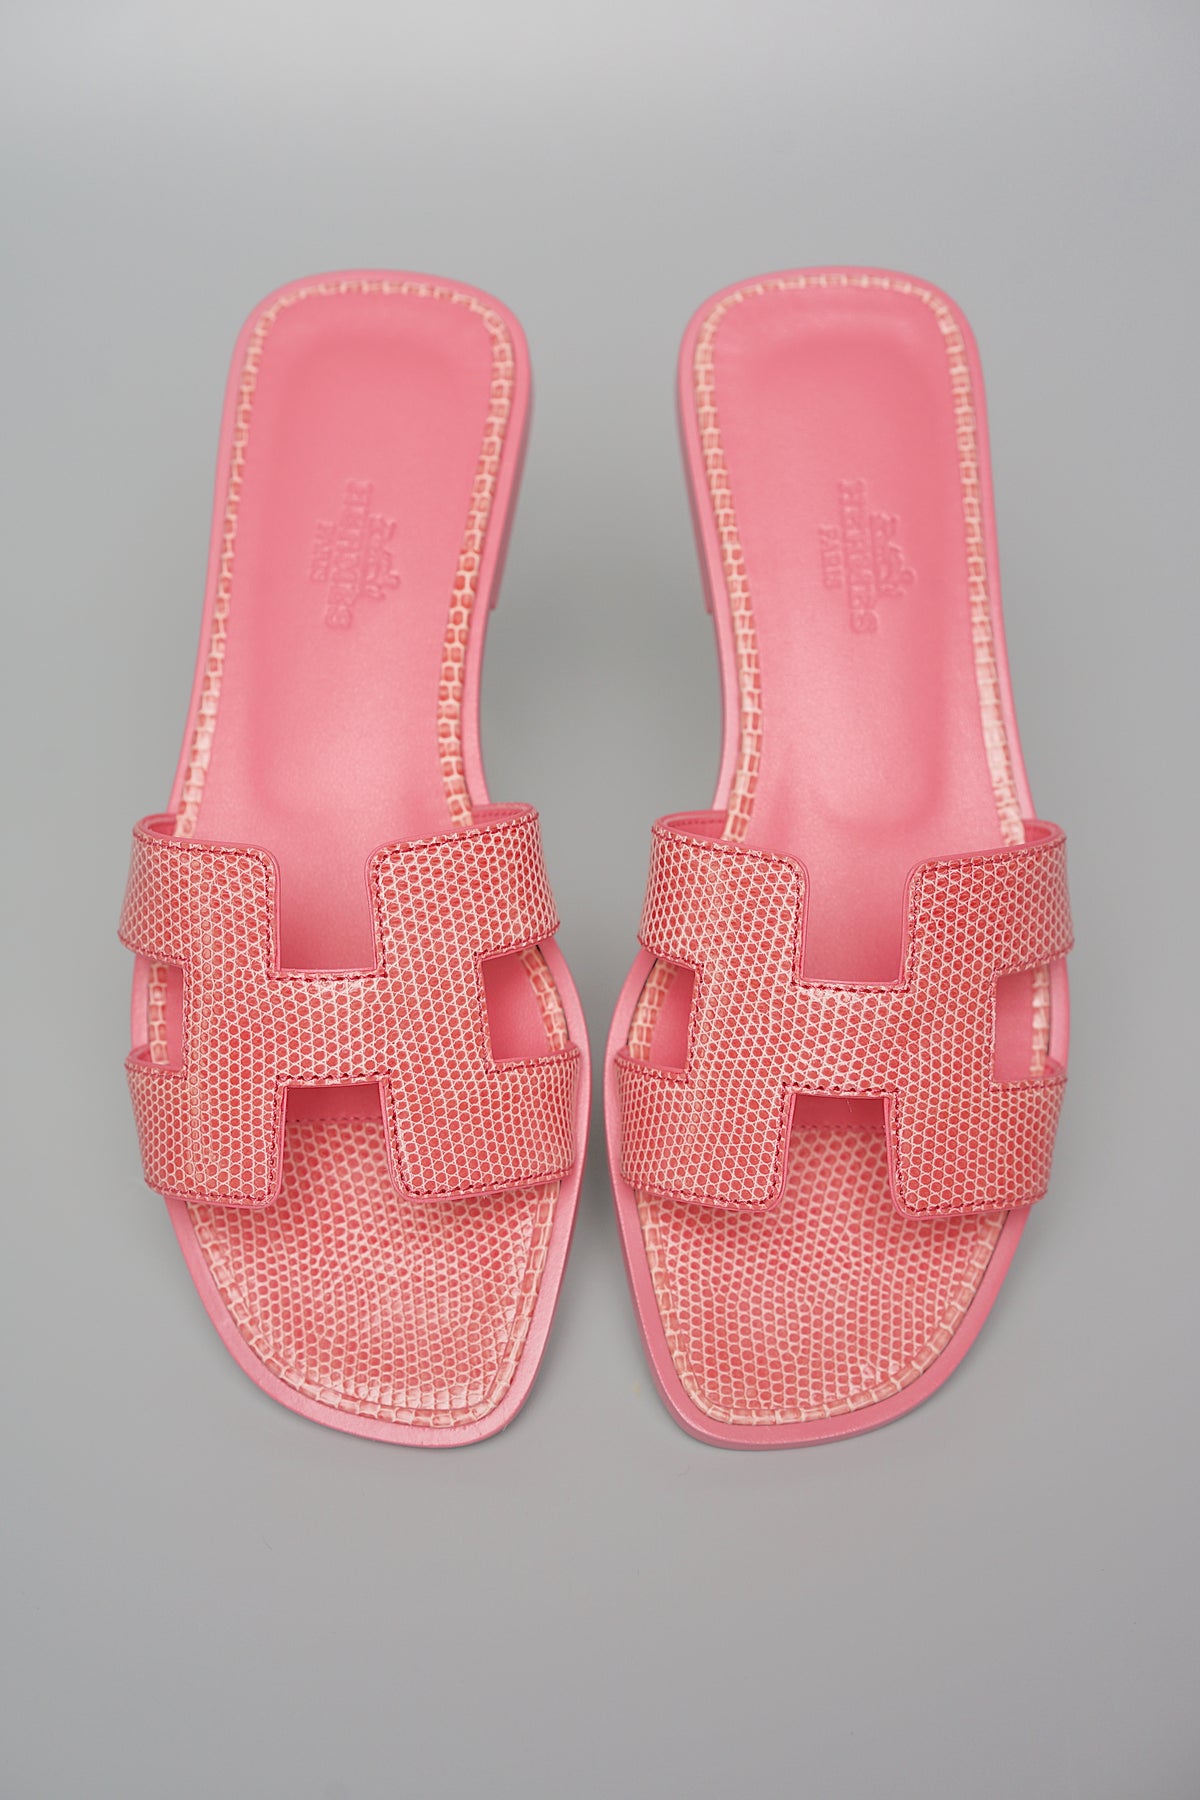 Hermes Oran Sandals in Rose Jaipur Lizard Size 35 (Brand New)